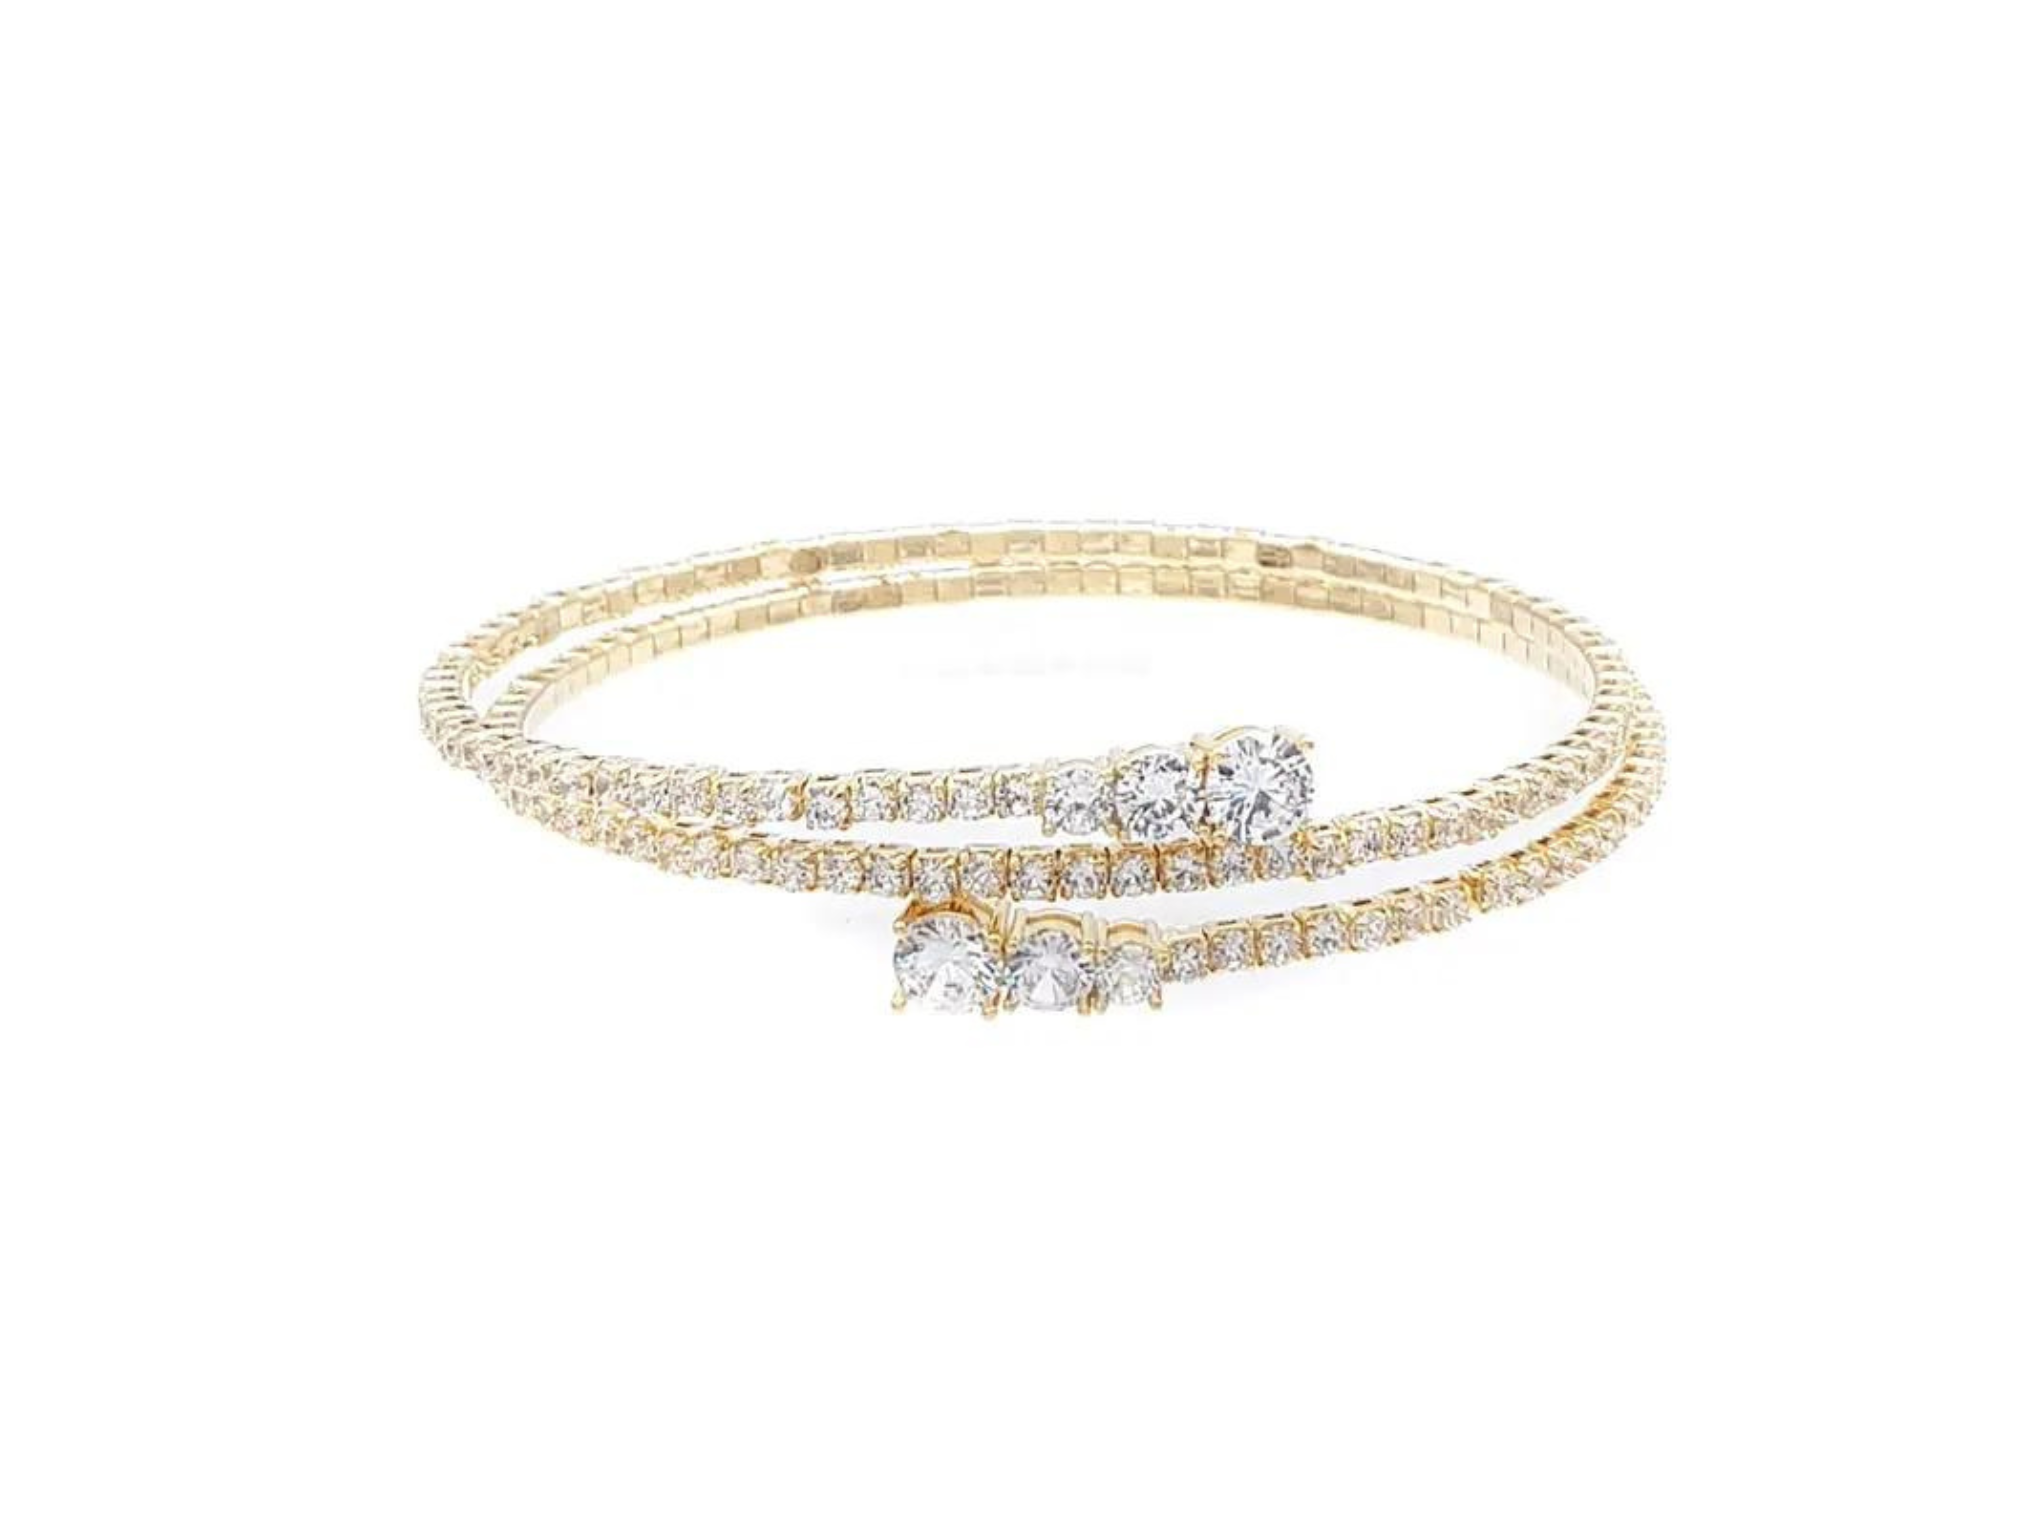 Fiorella - Modern Crystal Bridal Bangle Bracelet